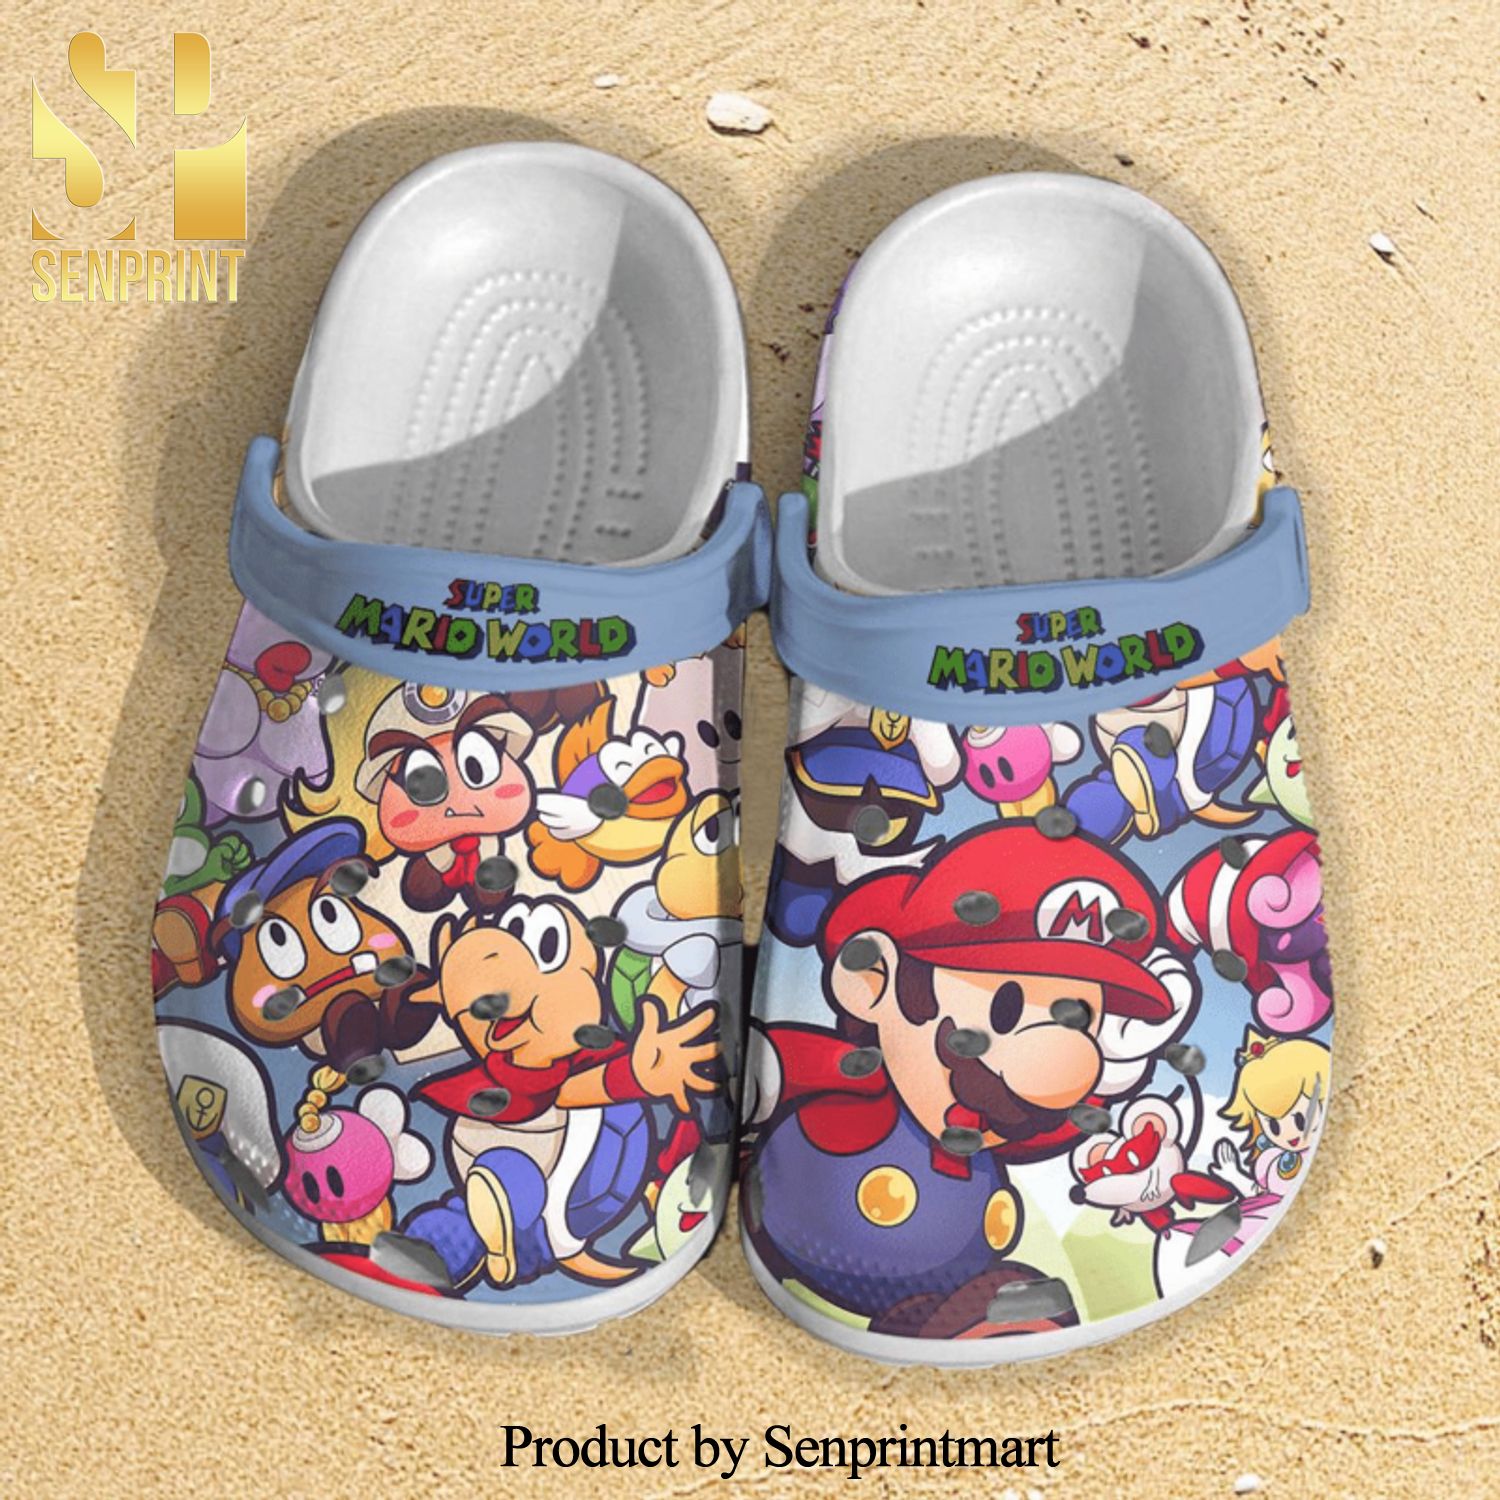 Super Mario Bros All Over Printed Crocband Crocs